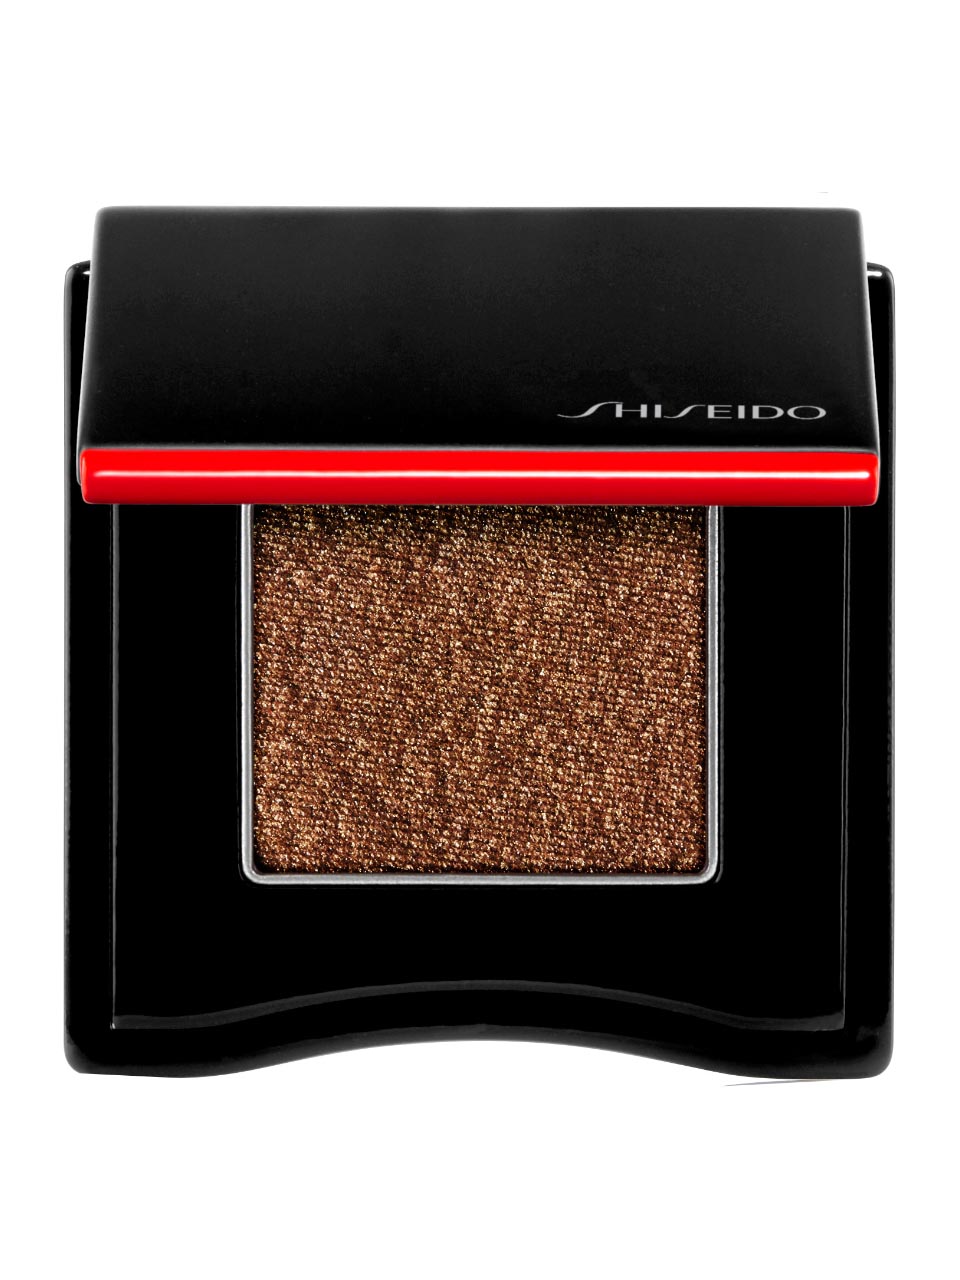 Shiseido Make-Up Pop Powdergel Eye Shadow N° 05 Zoku-Zoku Brown null - onesize - 1